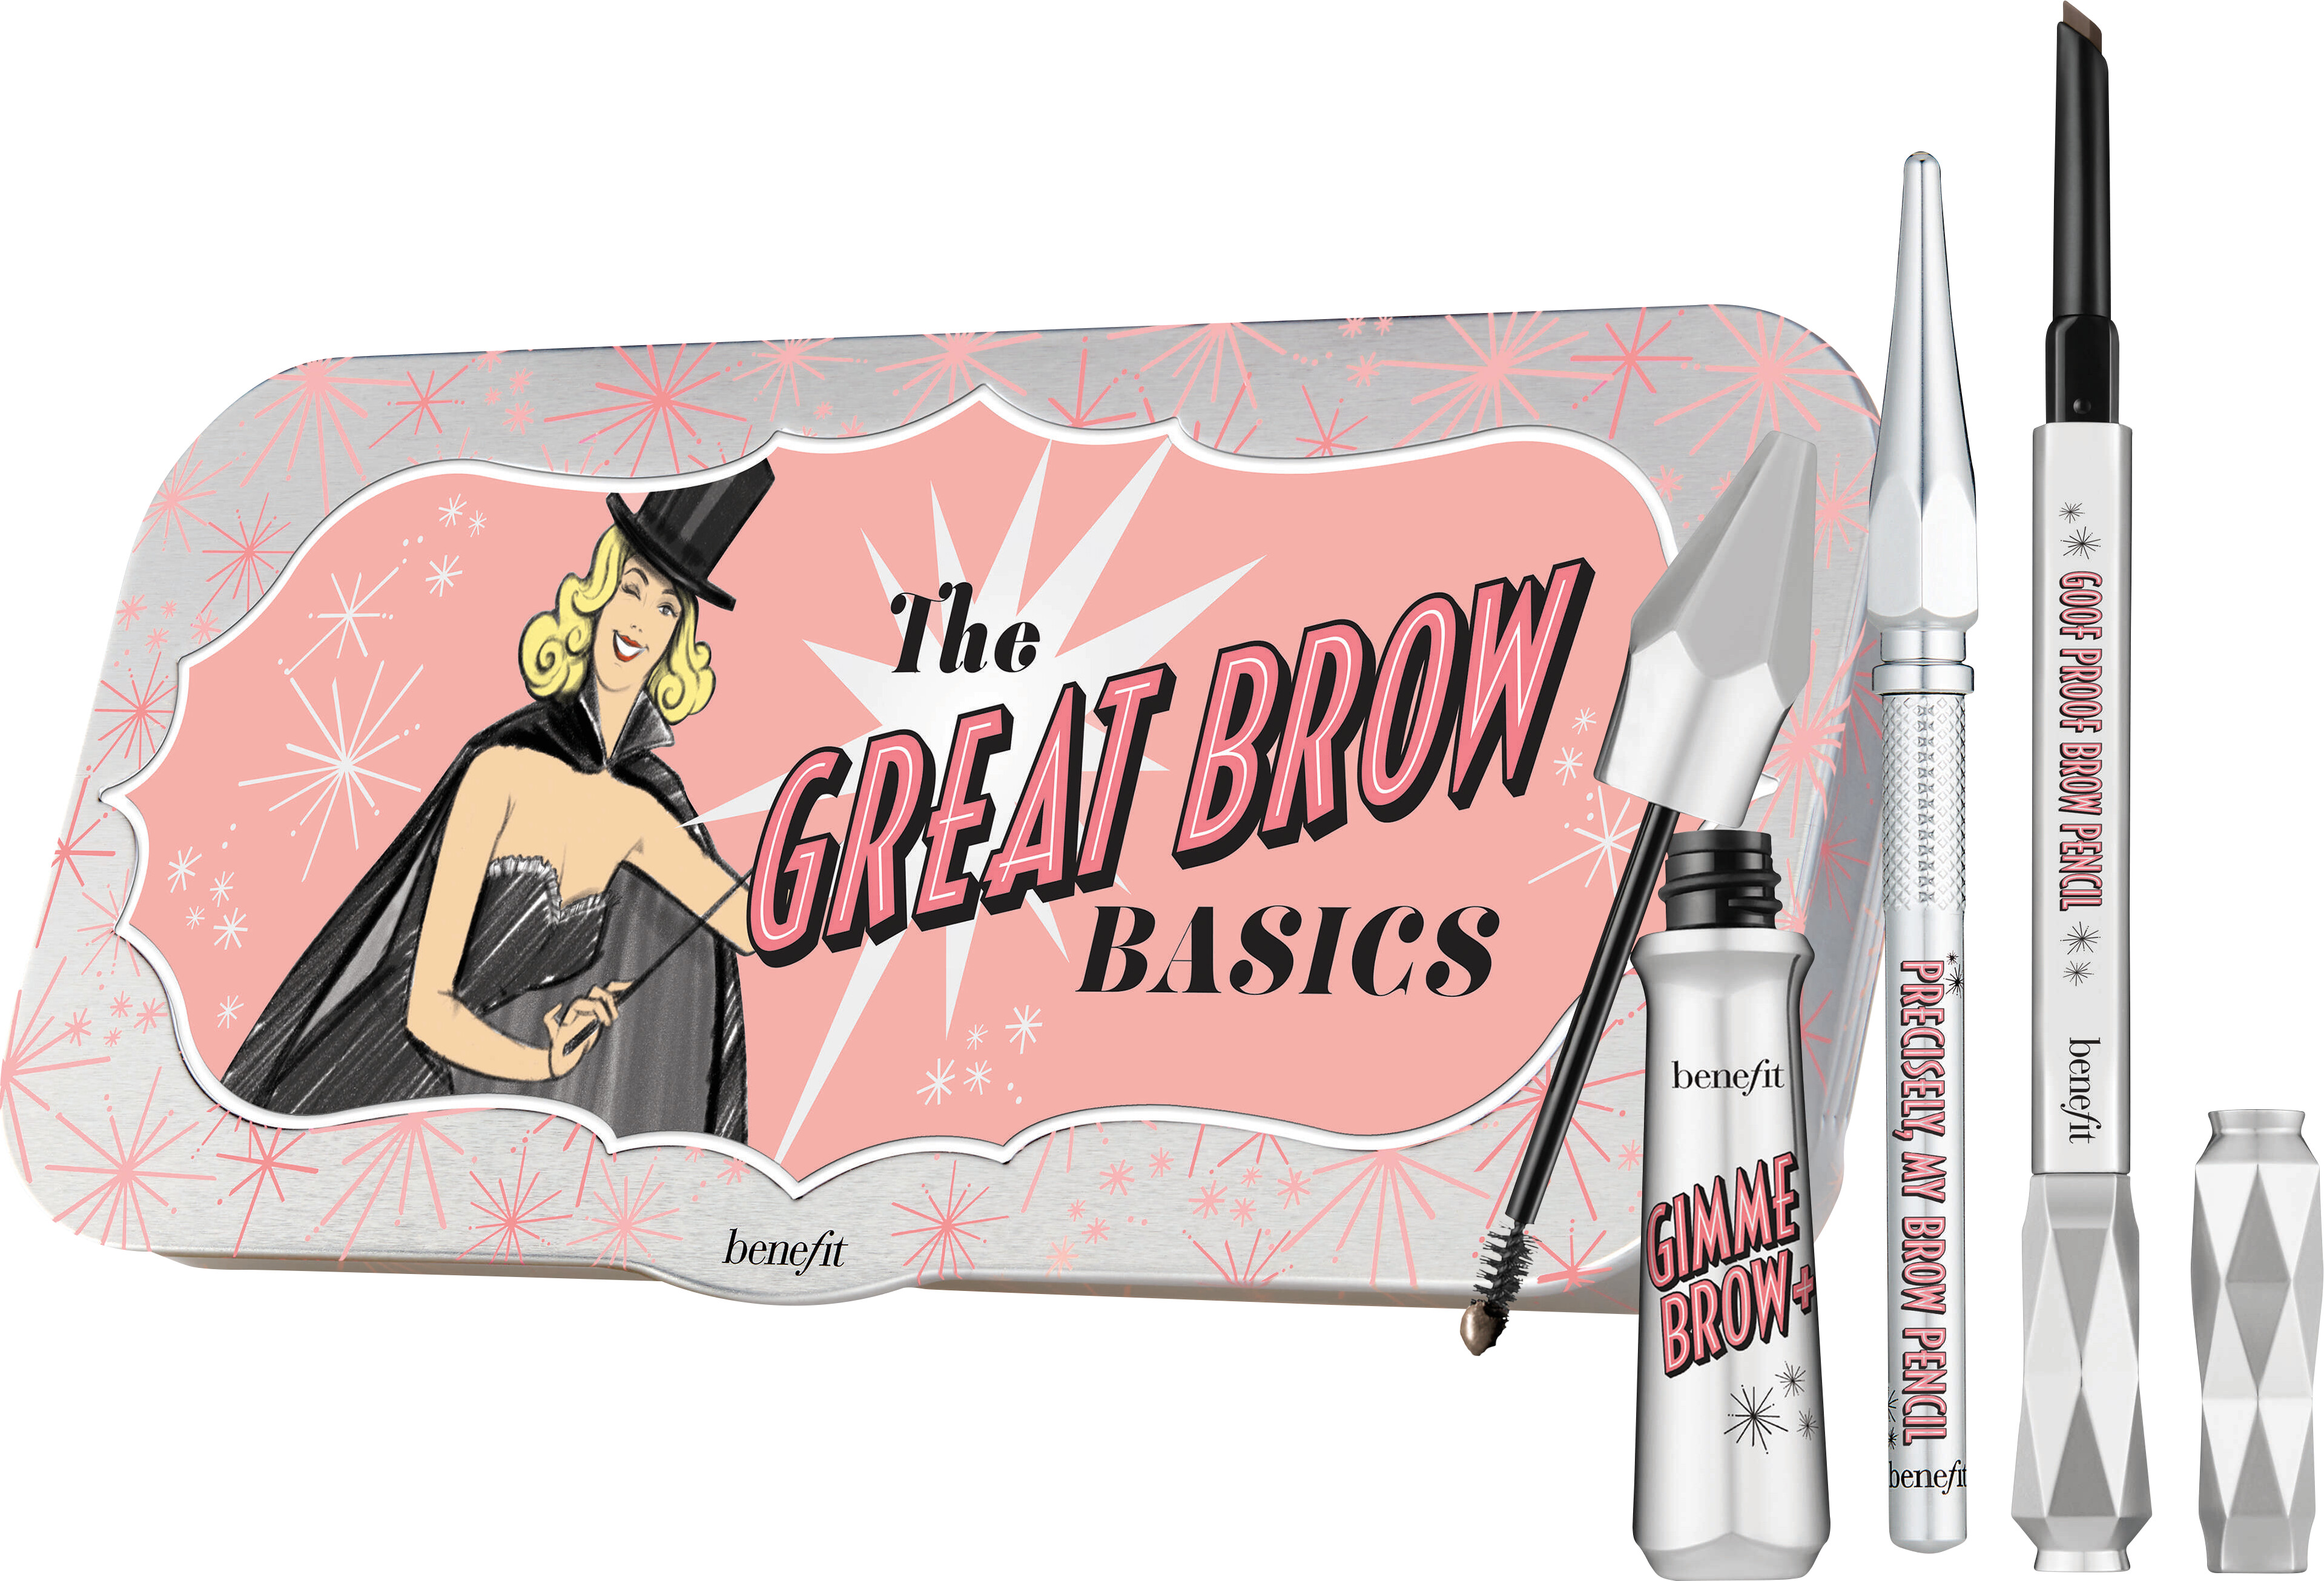 Benefit The Great Brow Basics Gift Set 04 - Medium